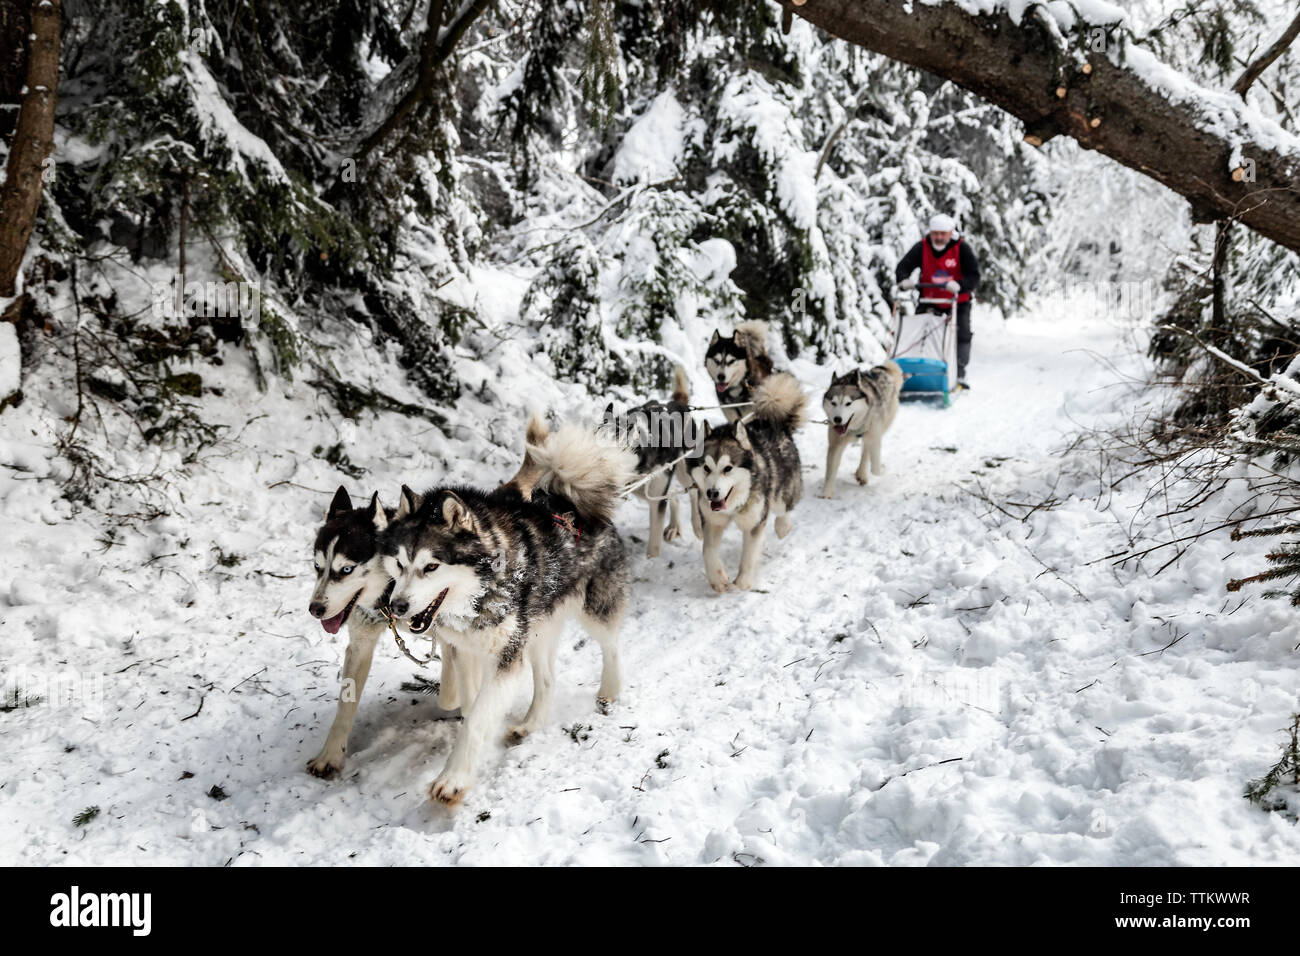 Man dogsledding amidst trees on snowy field Stock Photo